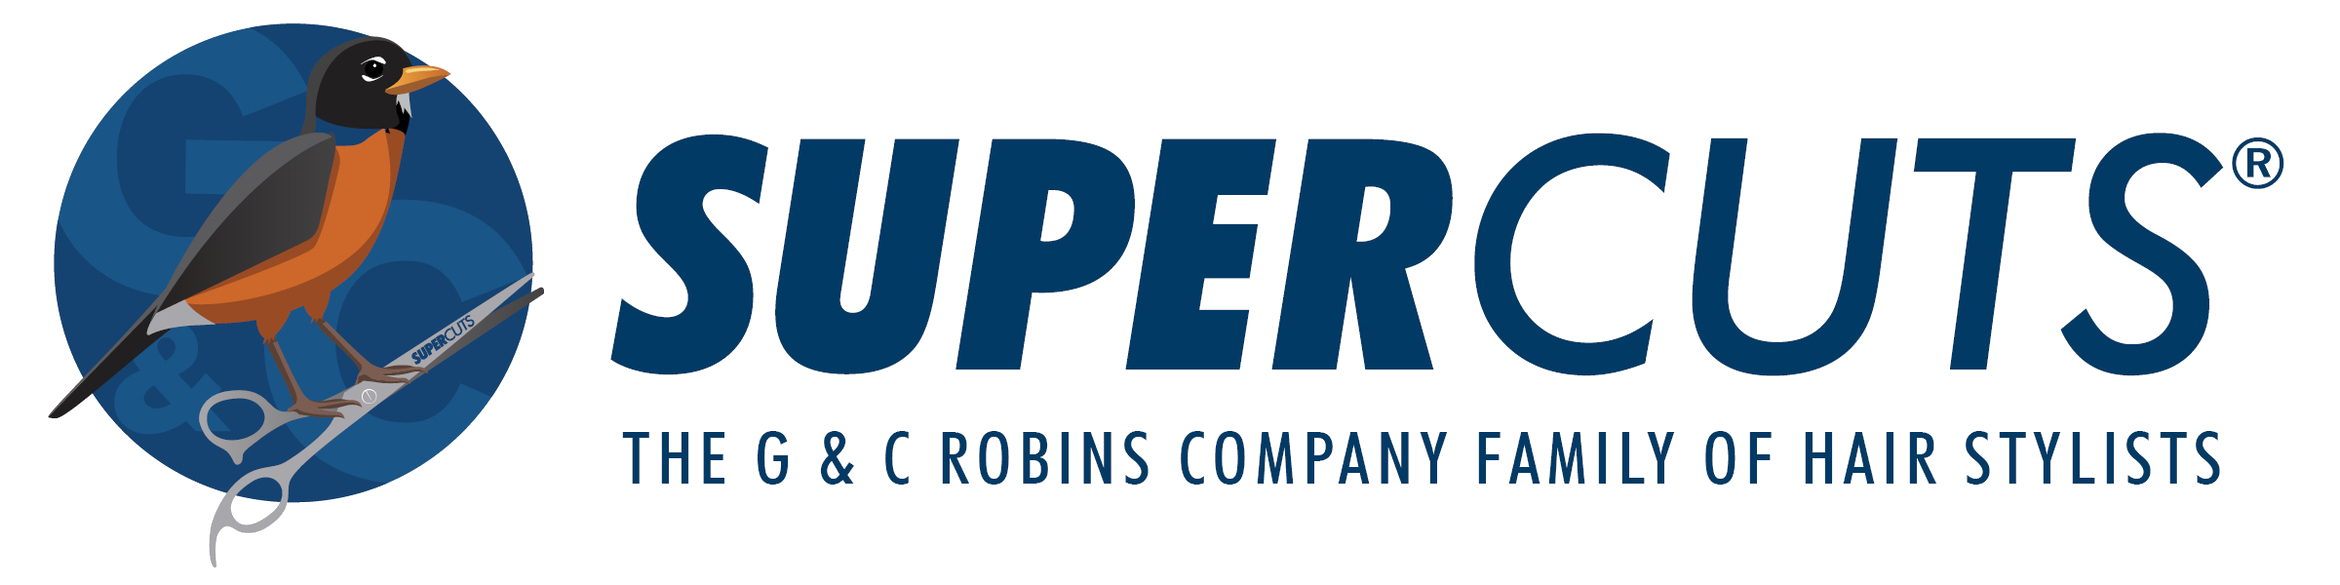 Supercuts Logo 4